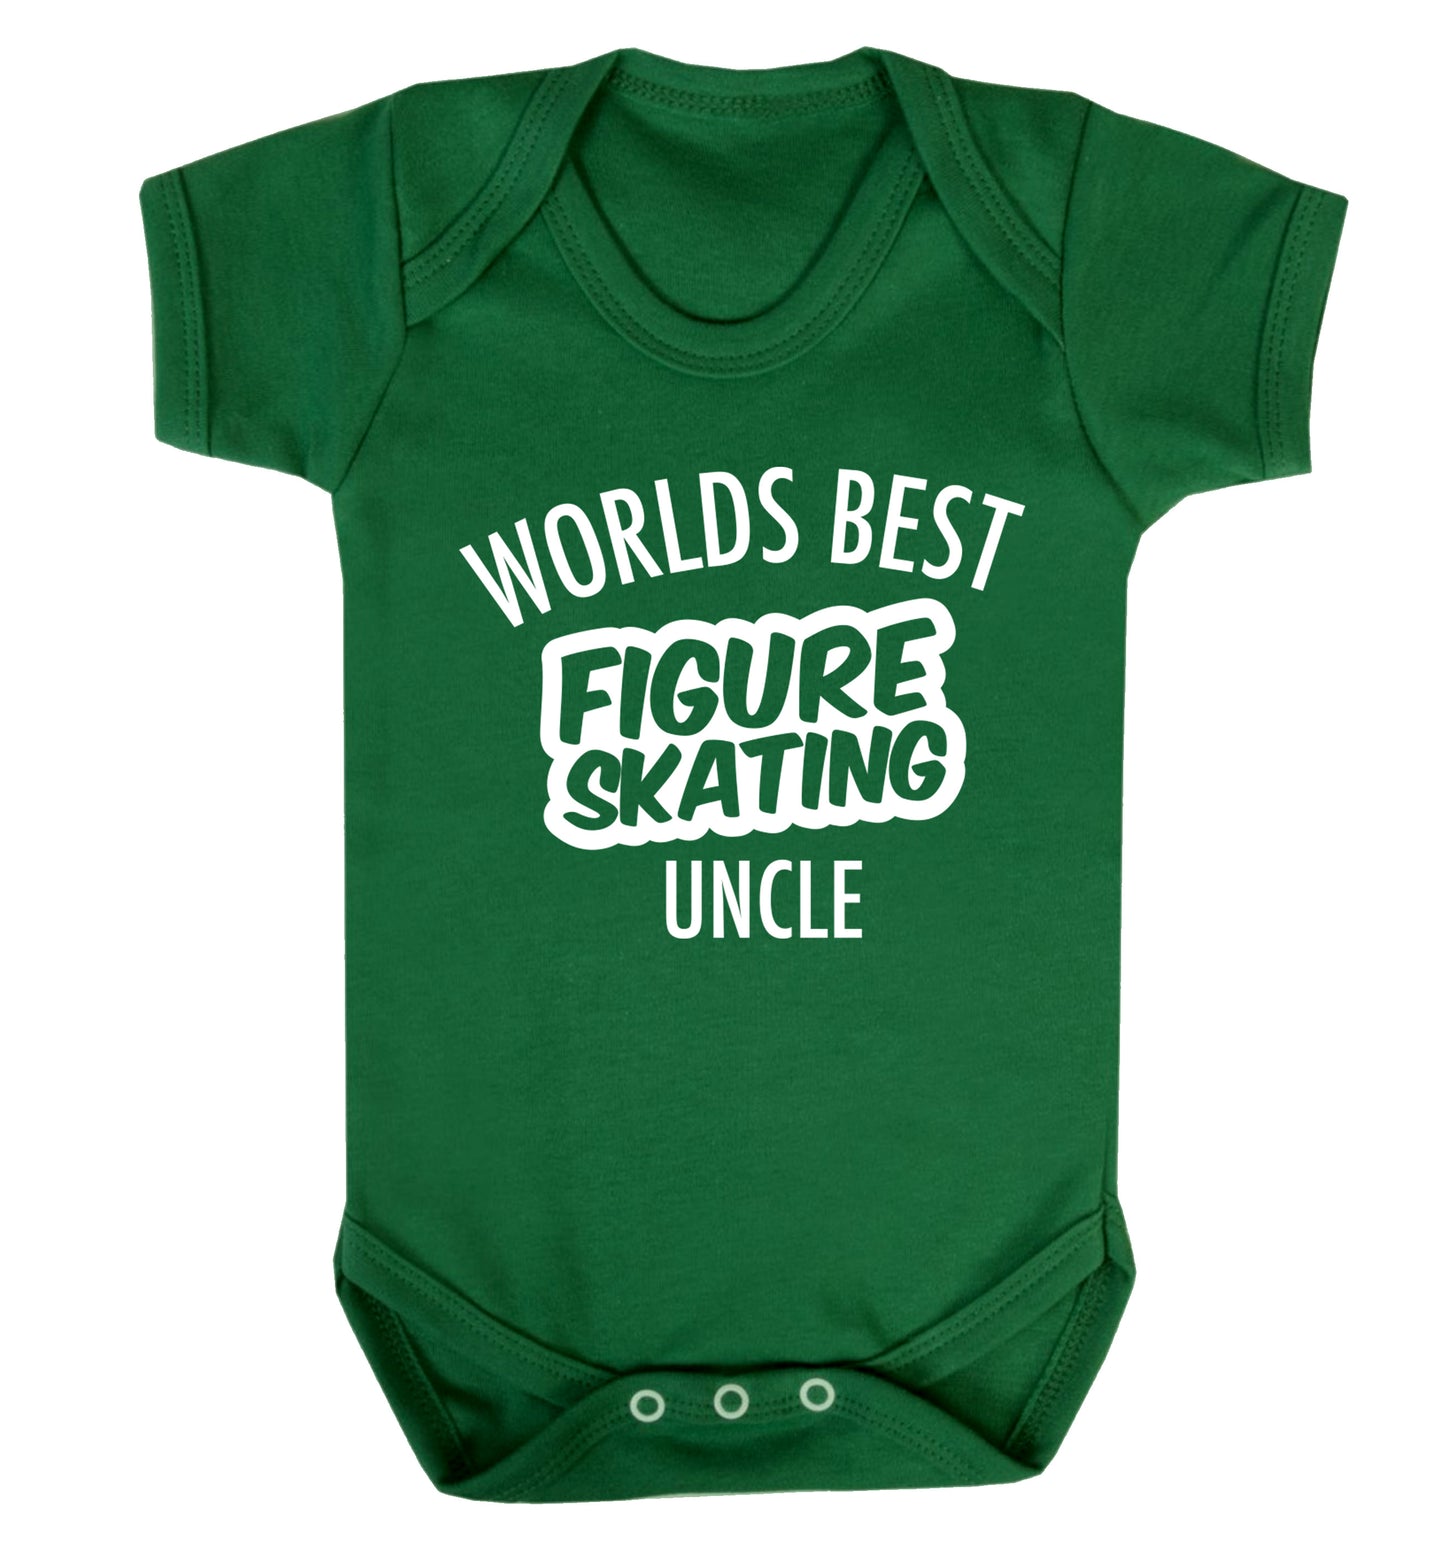 Worlds best figure skating uncle Baby Vest green 18-24 months